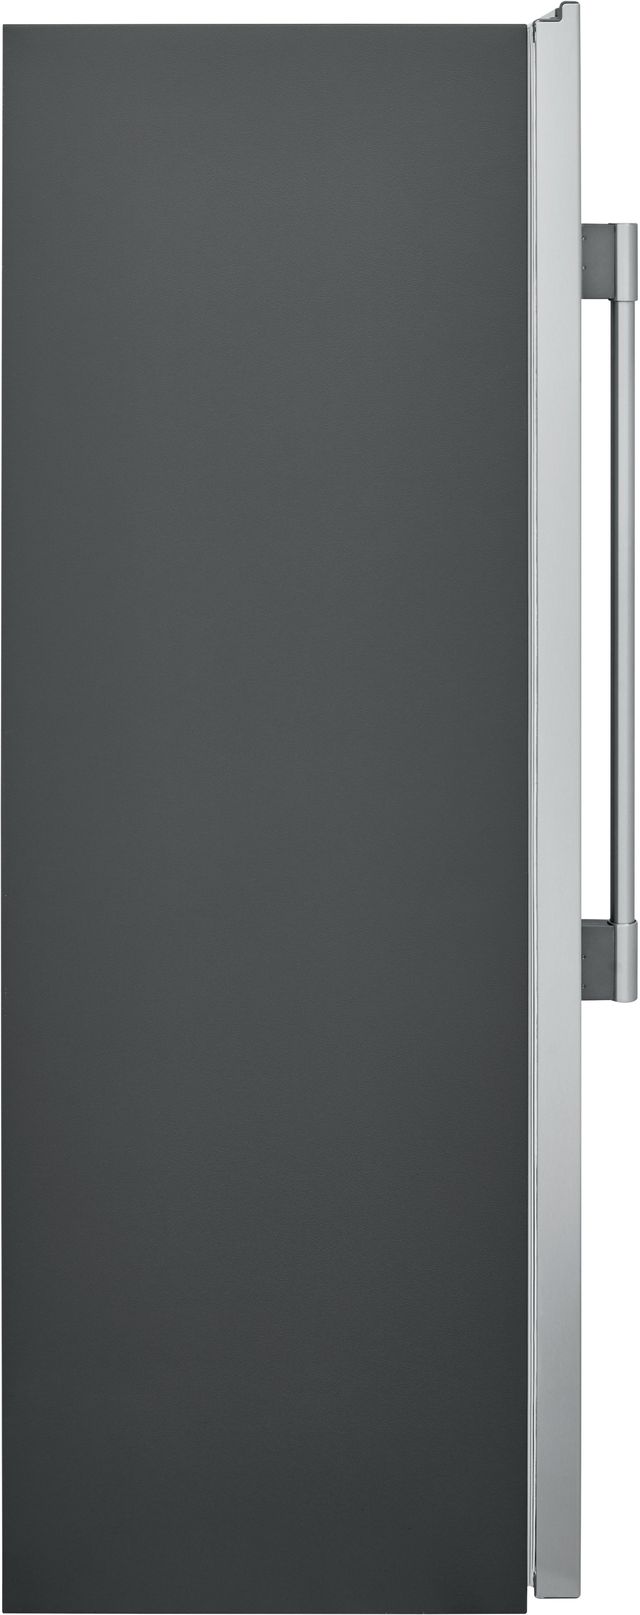 Frigidaire Professional® 18.6 Cu. Ft. Stainless Steel All Refrigerator Column 5